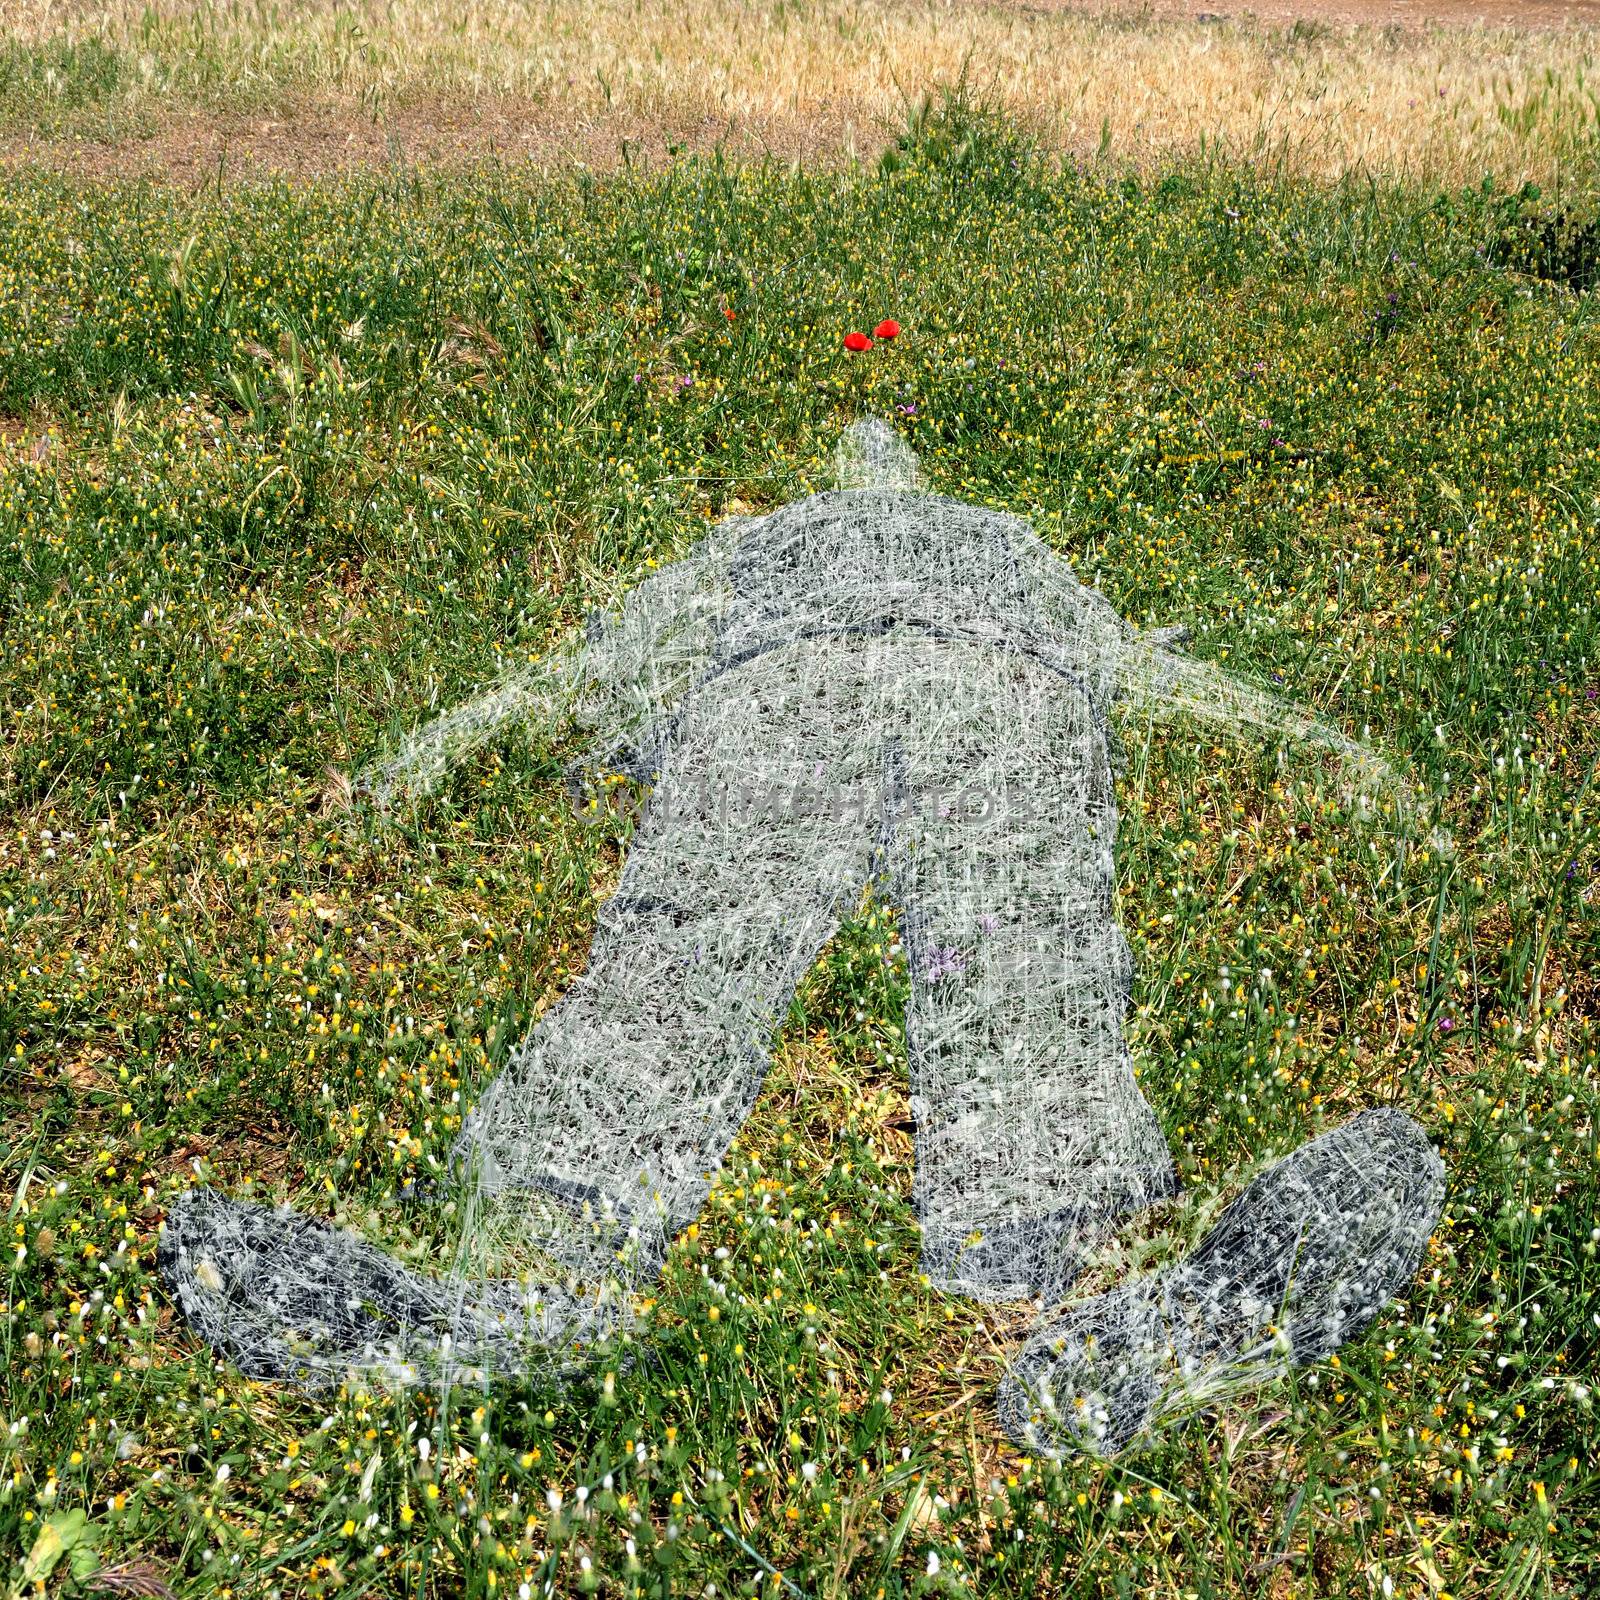 human figure imprinted on grass by sirylok